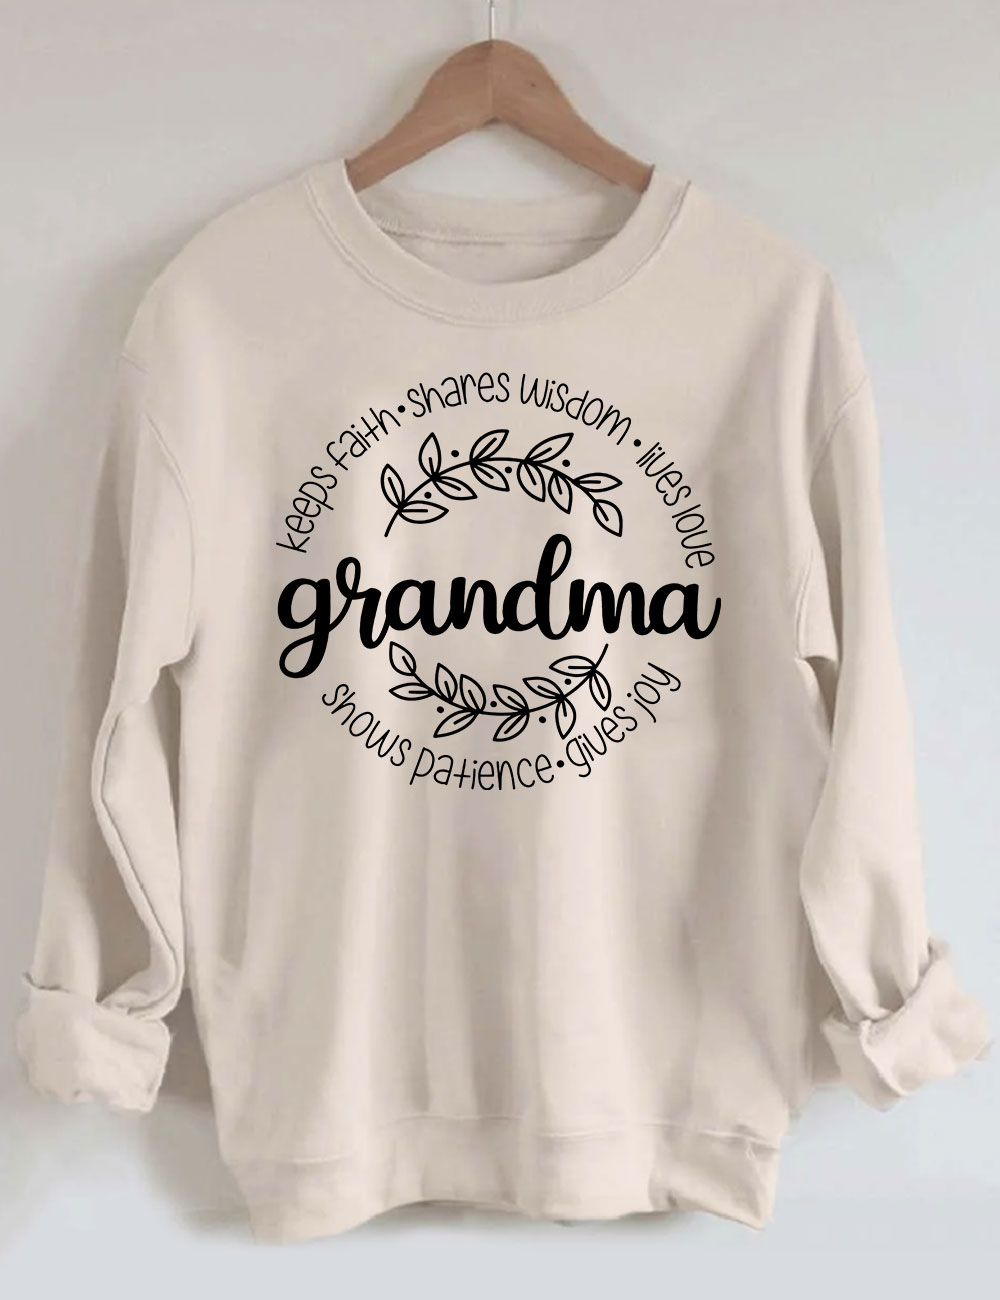 Grandma Sweatshirt